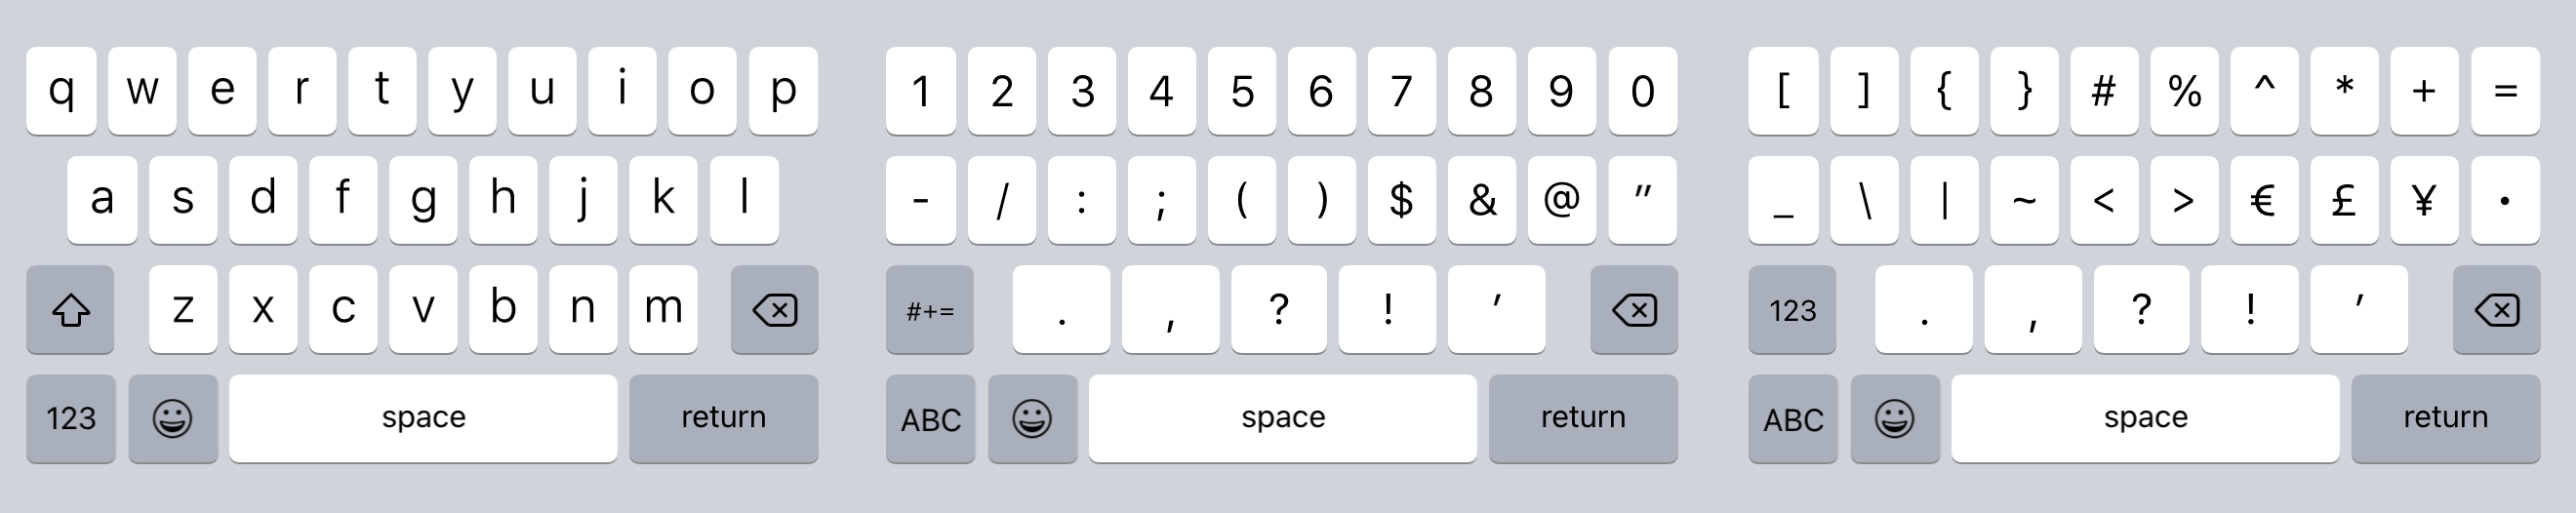 iOS keyboard layers